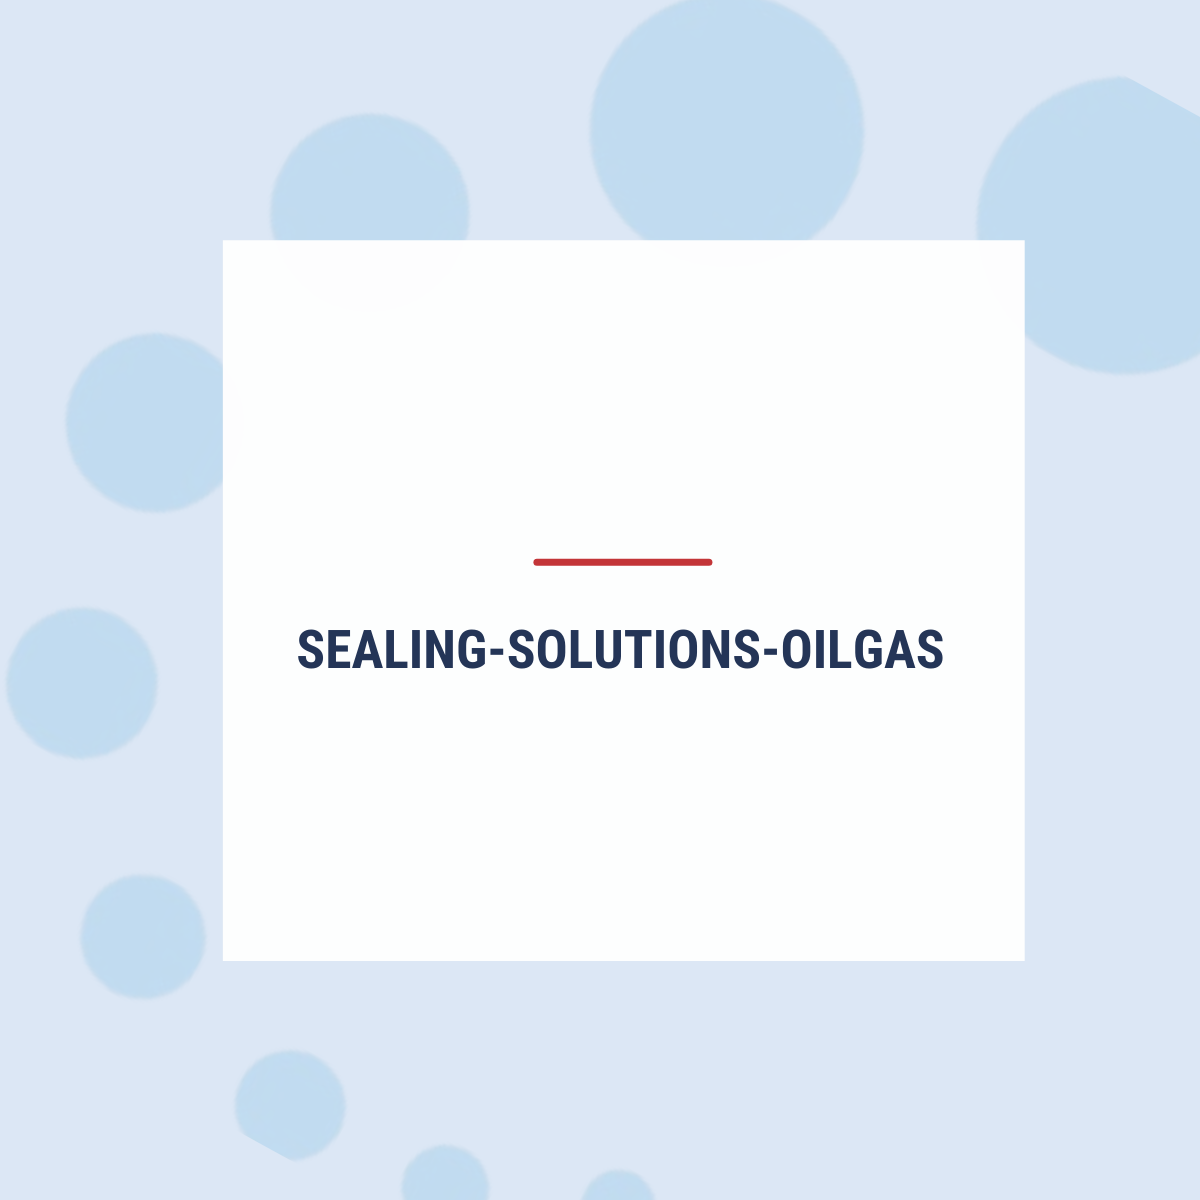 SEALING-SOLUTIONS-OILGAS